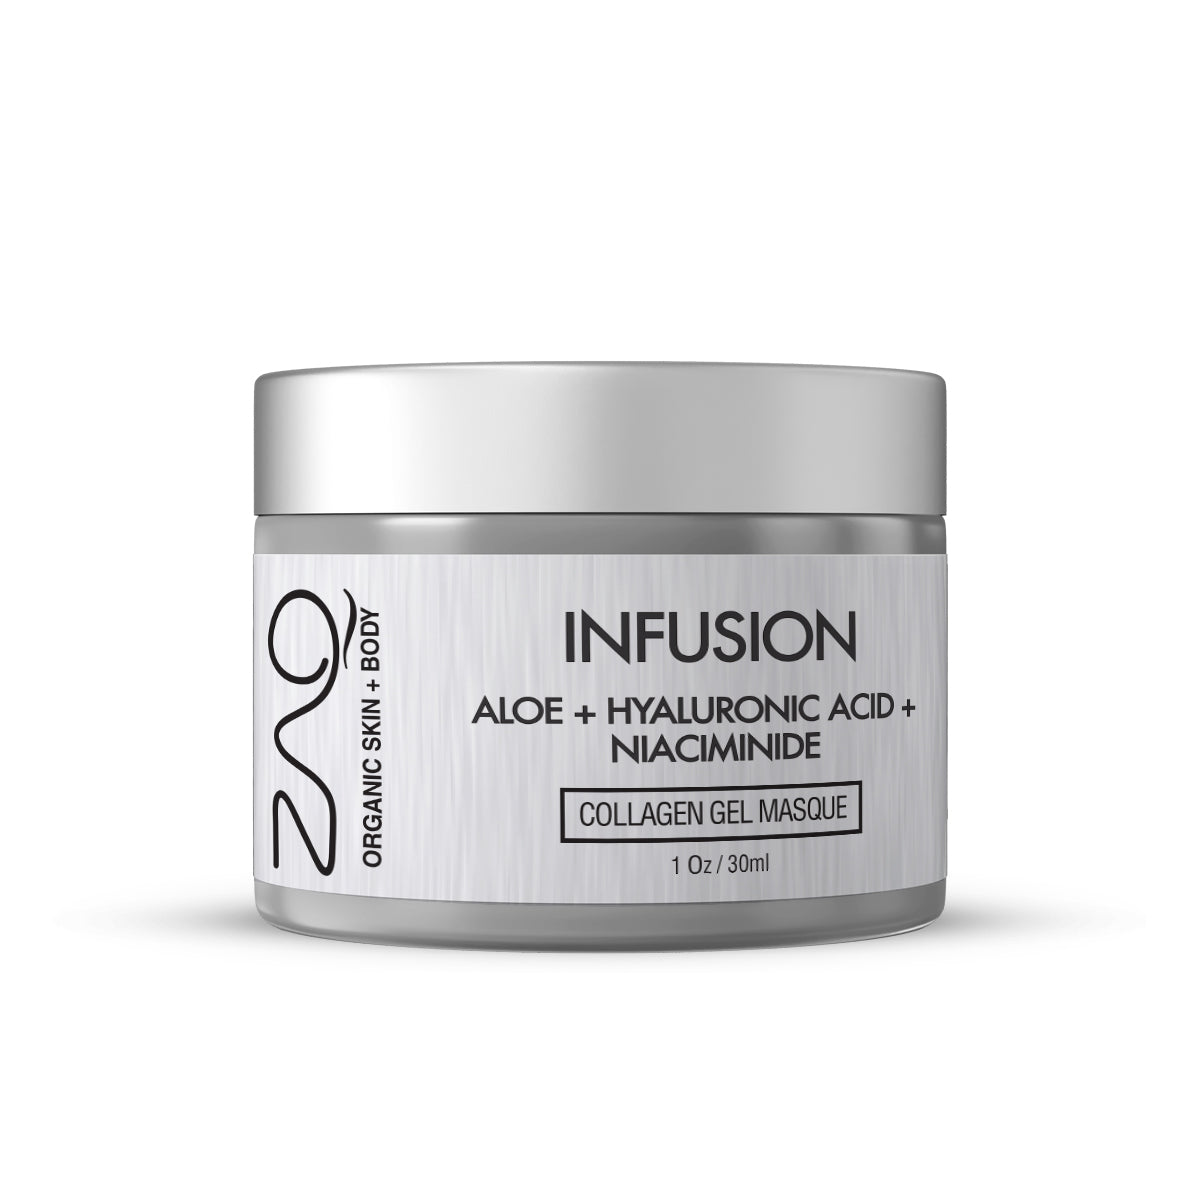 ZAQ Organic Infusion Collagen Gel Masque - Aloe + Hyaluronic Acid + Niacinamide by ZAQ Skin & Body